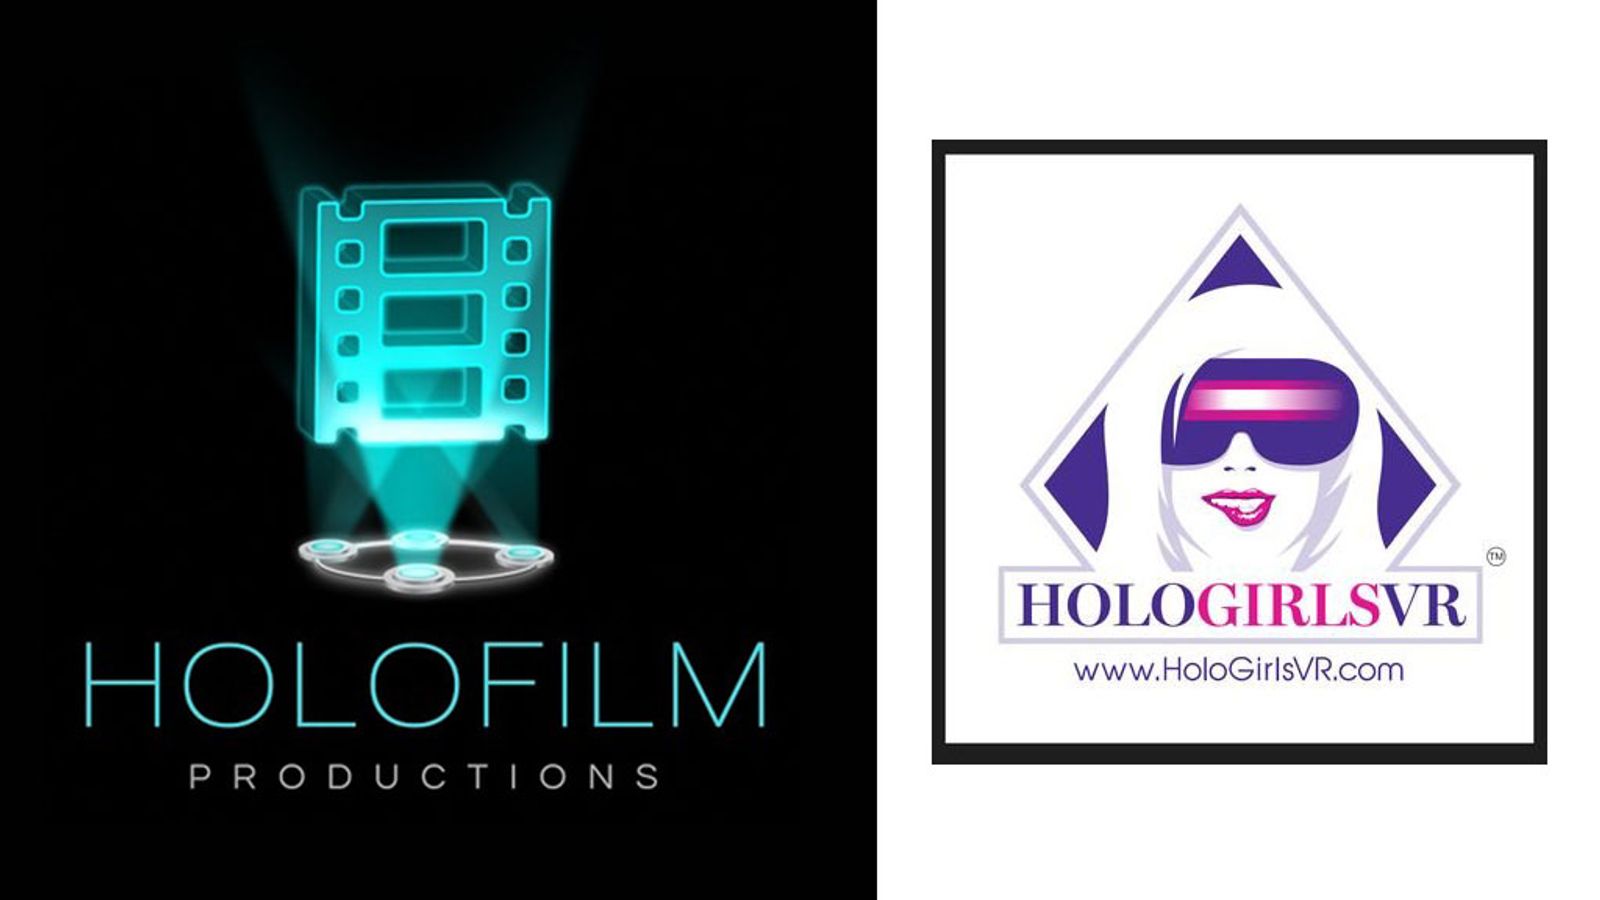 HoloFilm Productions & HoloGirlsVR.com Honored At 2017 AVN Awards